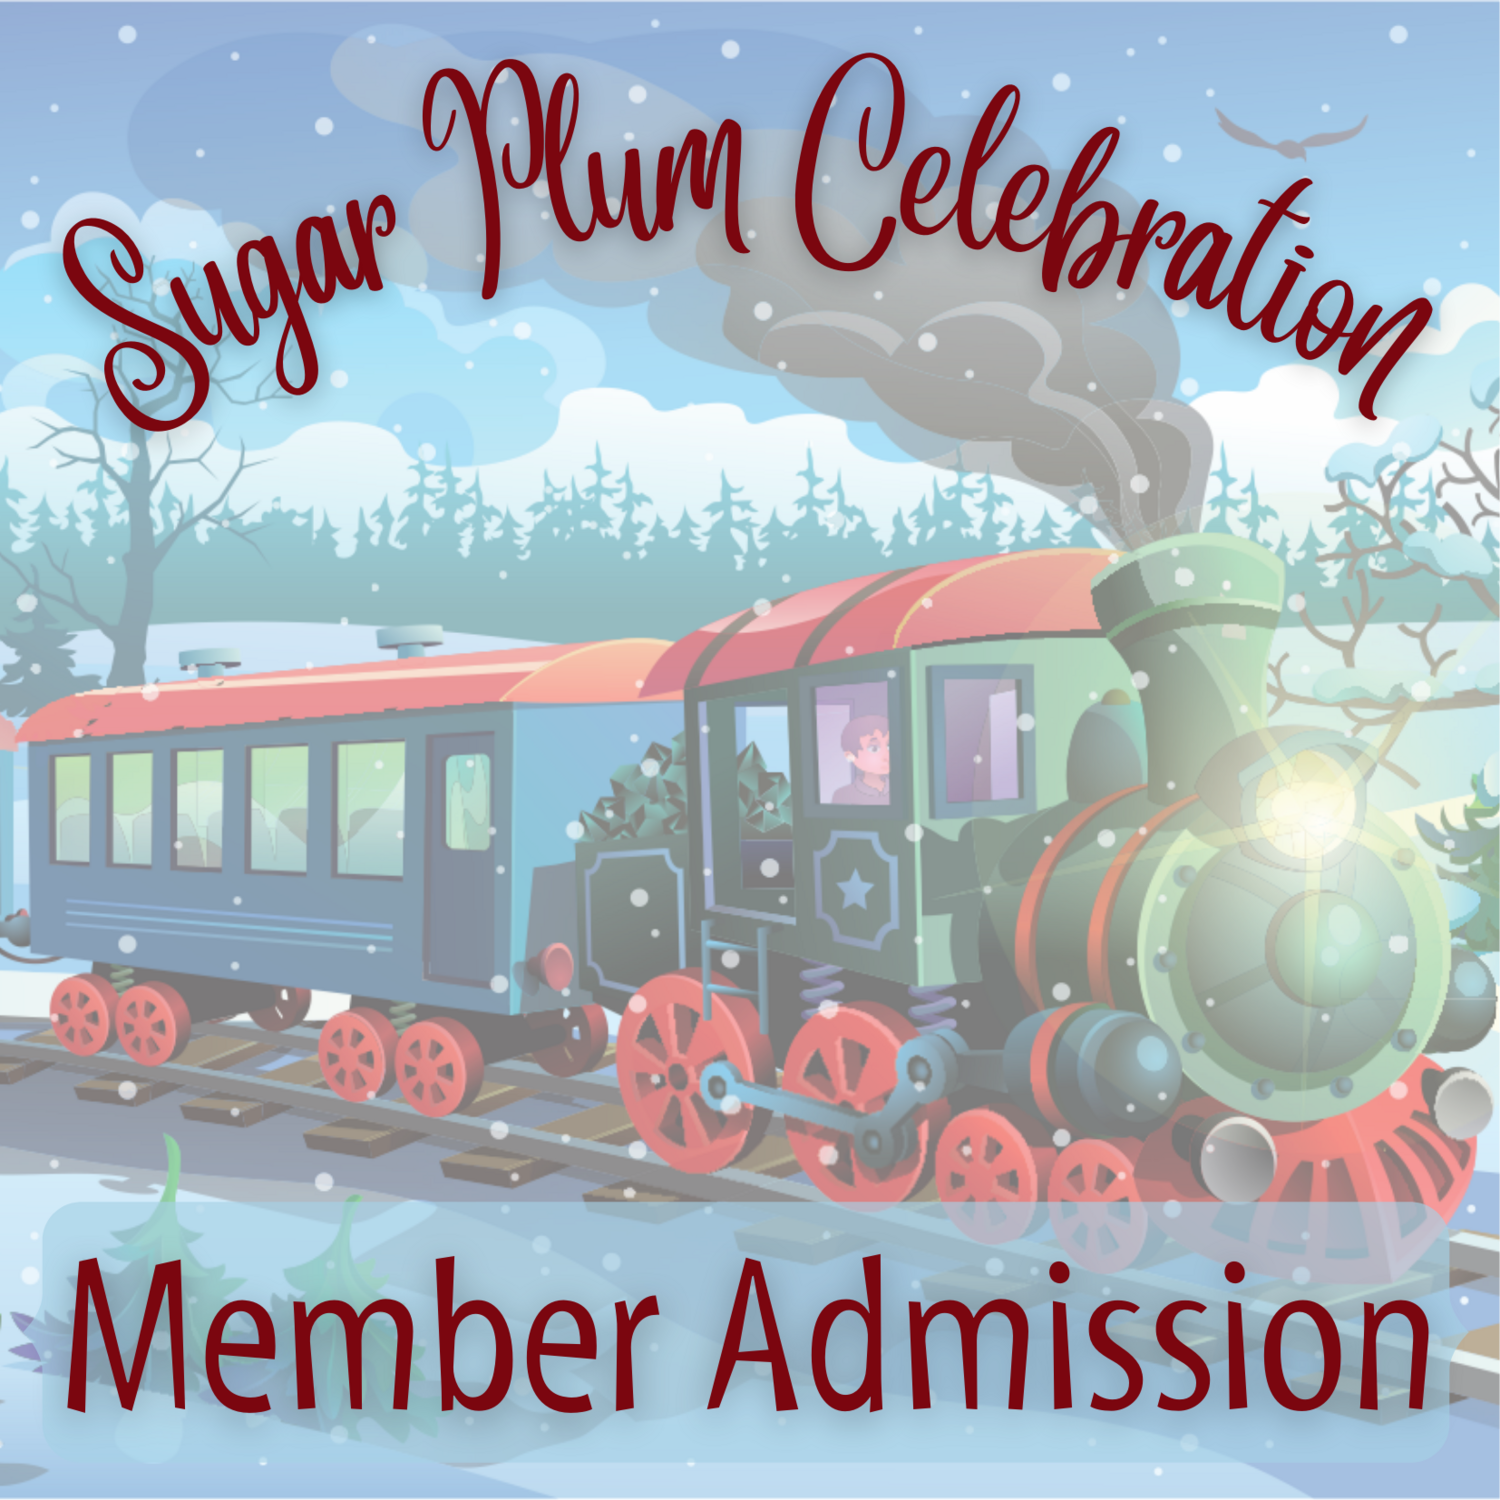 Sugar Plum Celebration - Member Admission